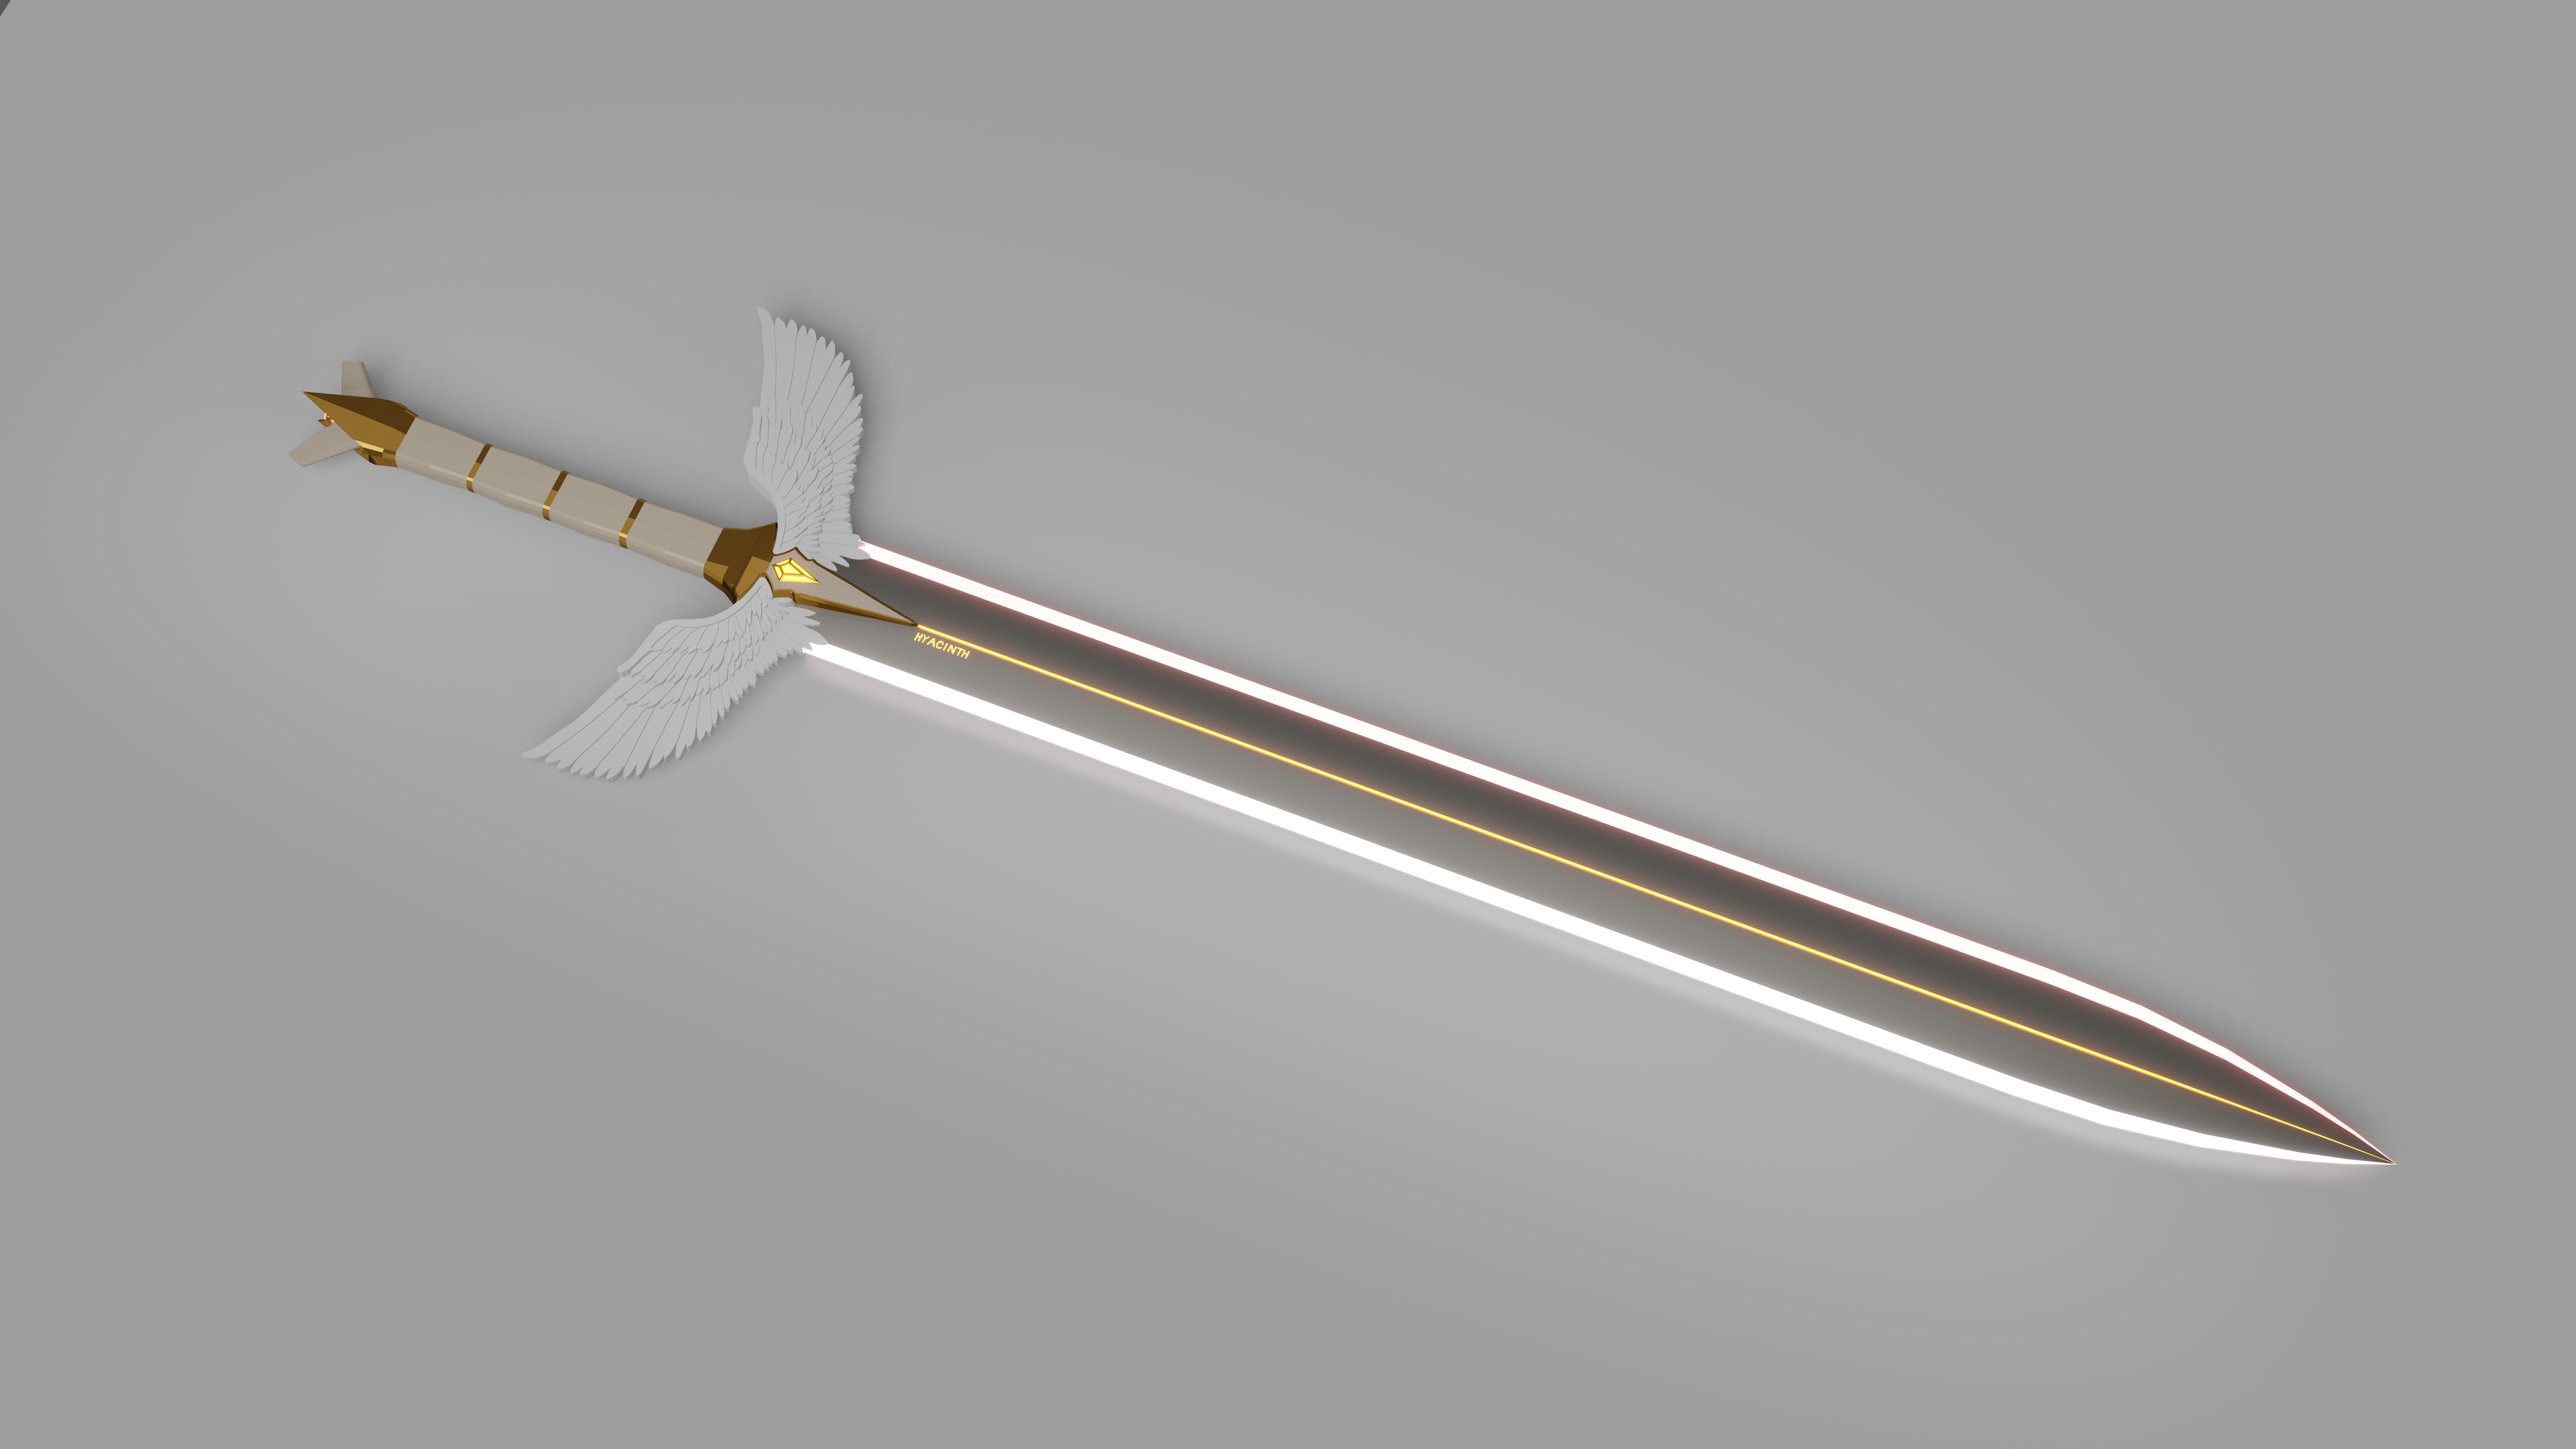 General 7680x4320 Blender sword weapon minimalism simple background CGI digital art